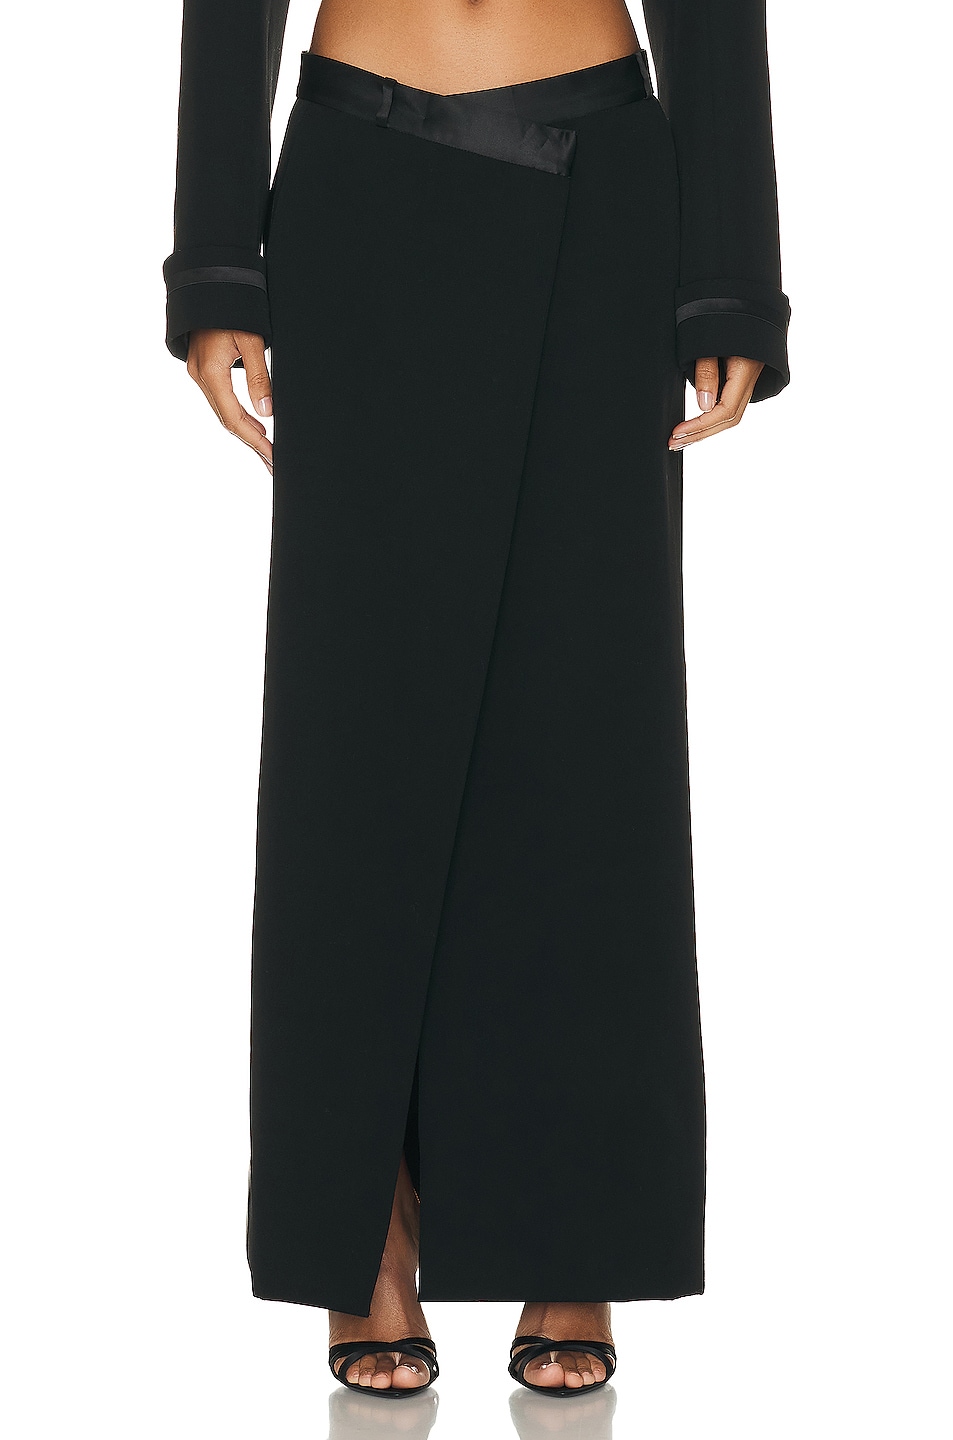 Clarisse Satin Combo Overlap Maxi Skirt in Black